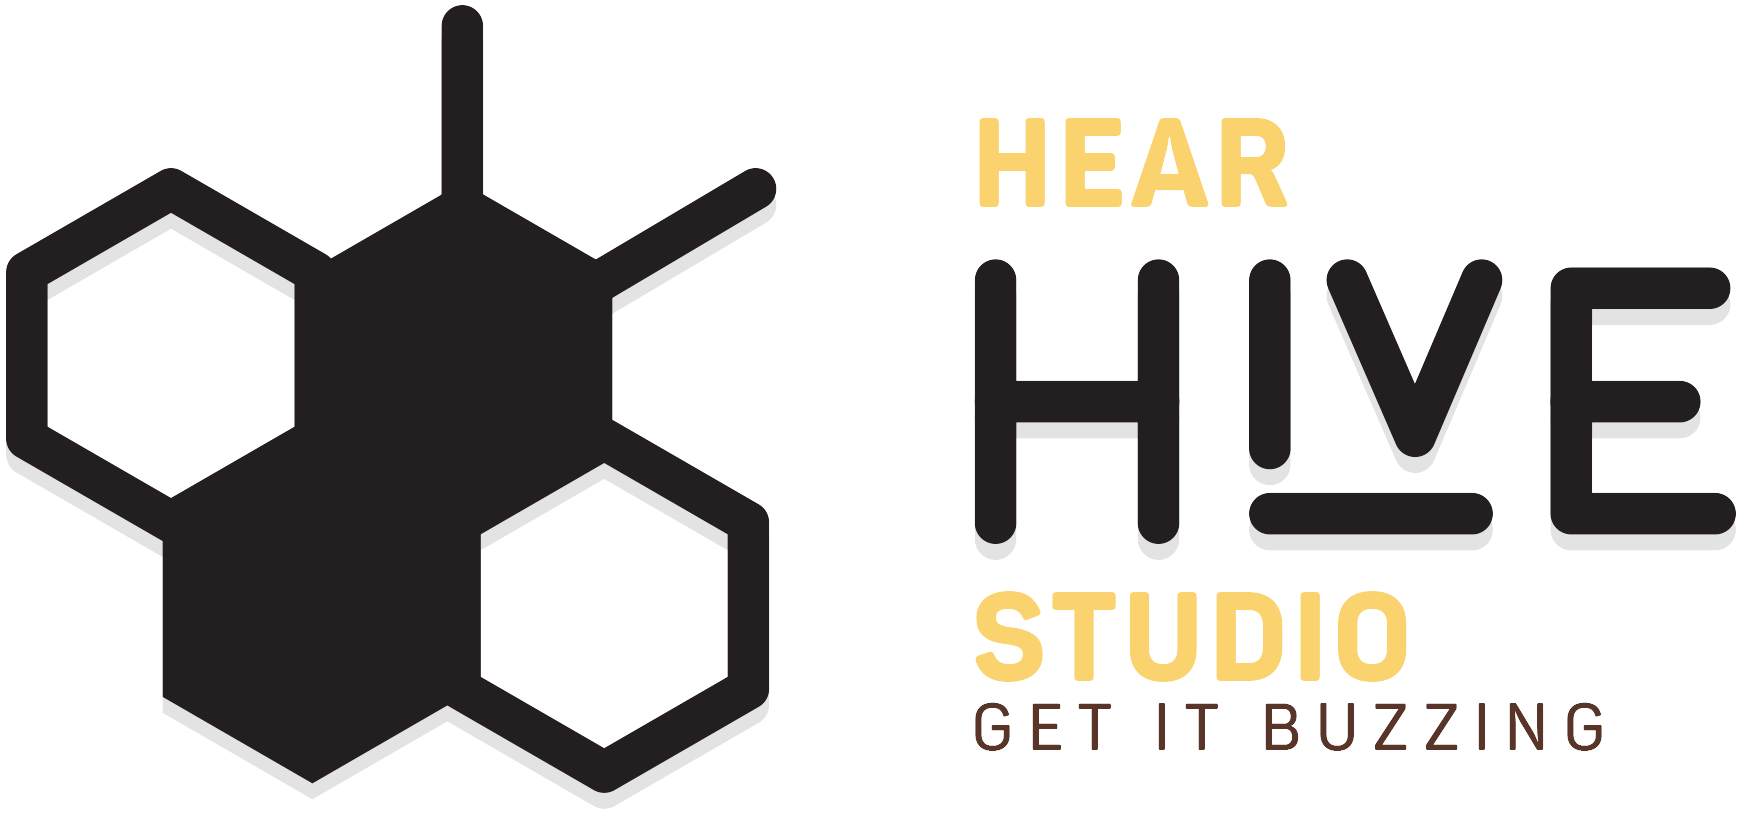 hearhive-logo